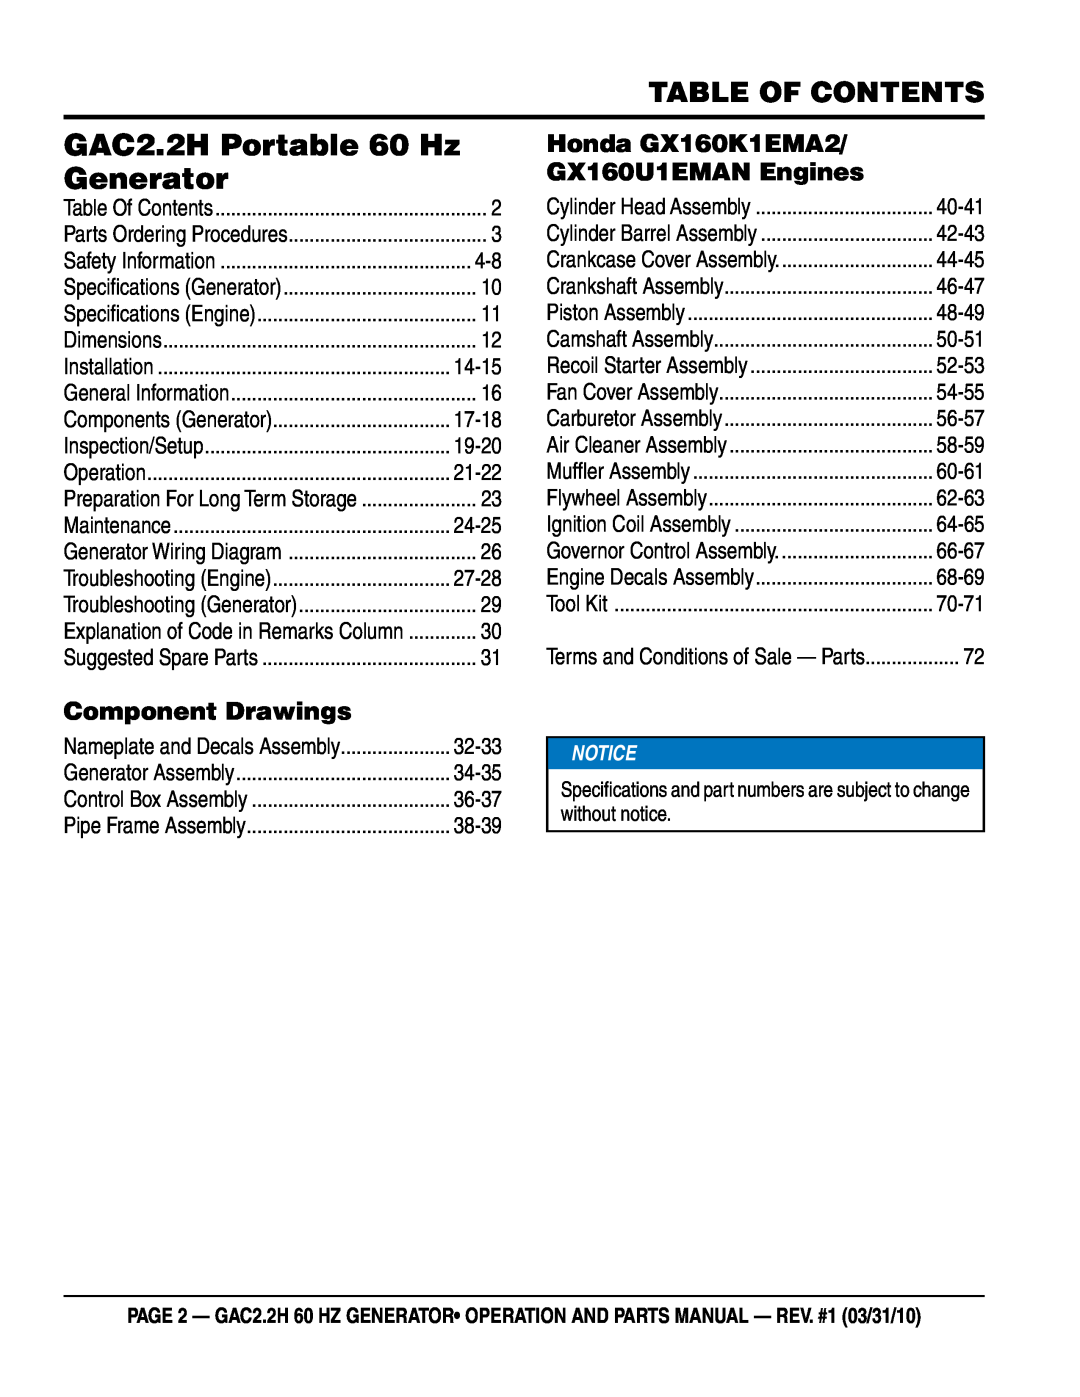 Multiquip GAC2.2H manual Table of Contents, Component Drawings, Honda GX160K1EMA2 GX160U1EMAN Engines 